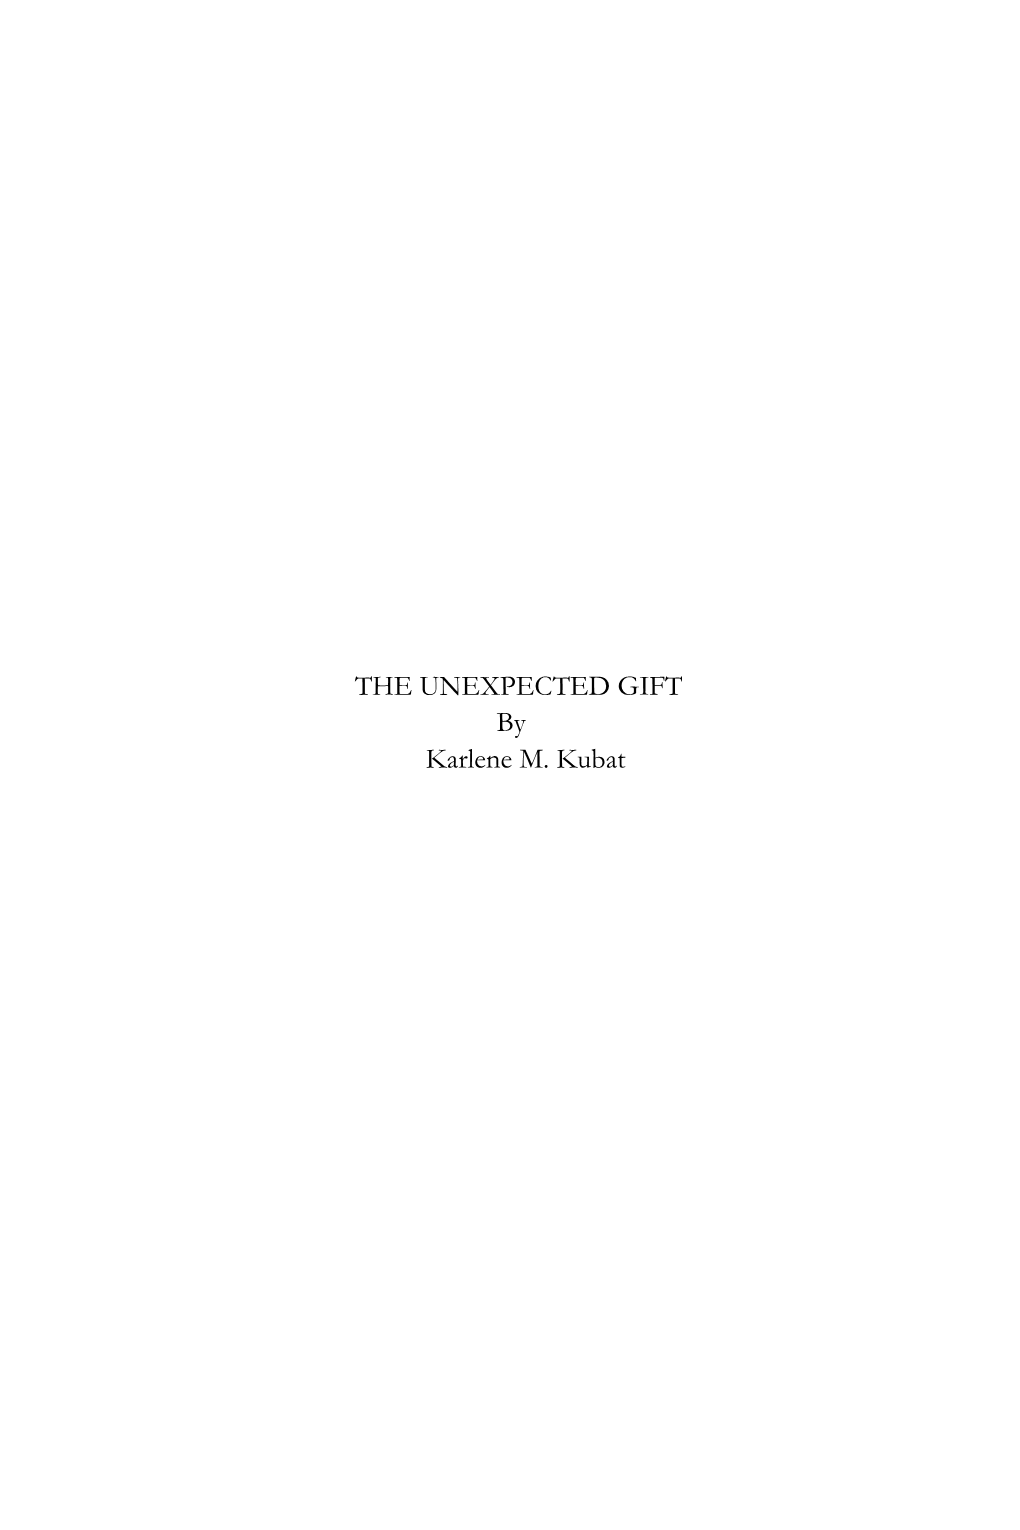 THE UNEXPECTED GIFT by Karlene M. Kubat